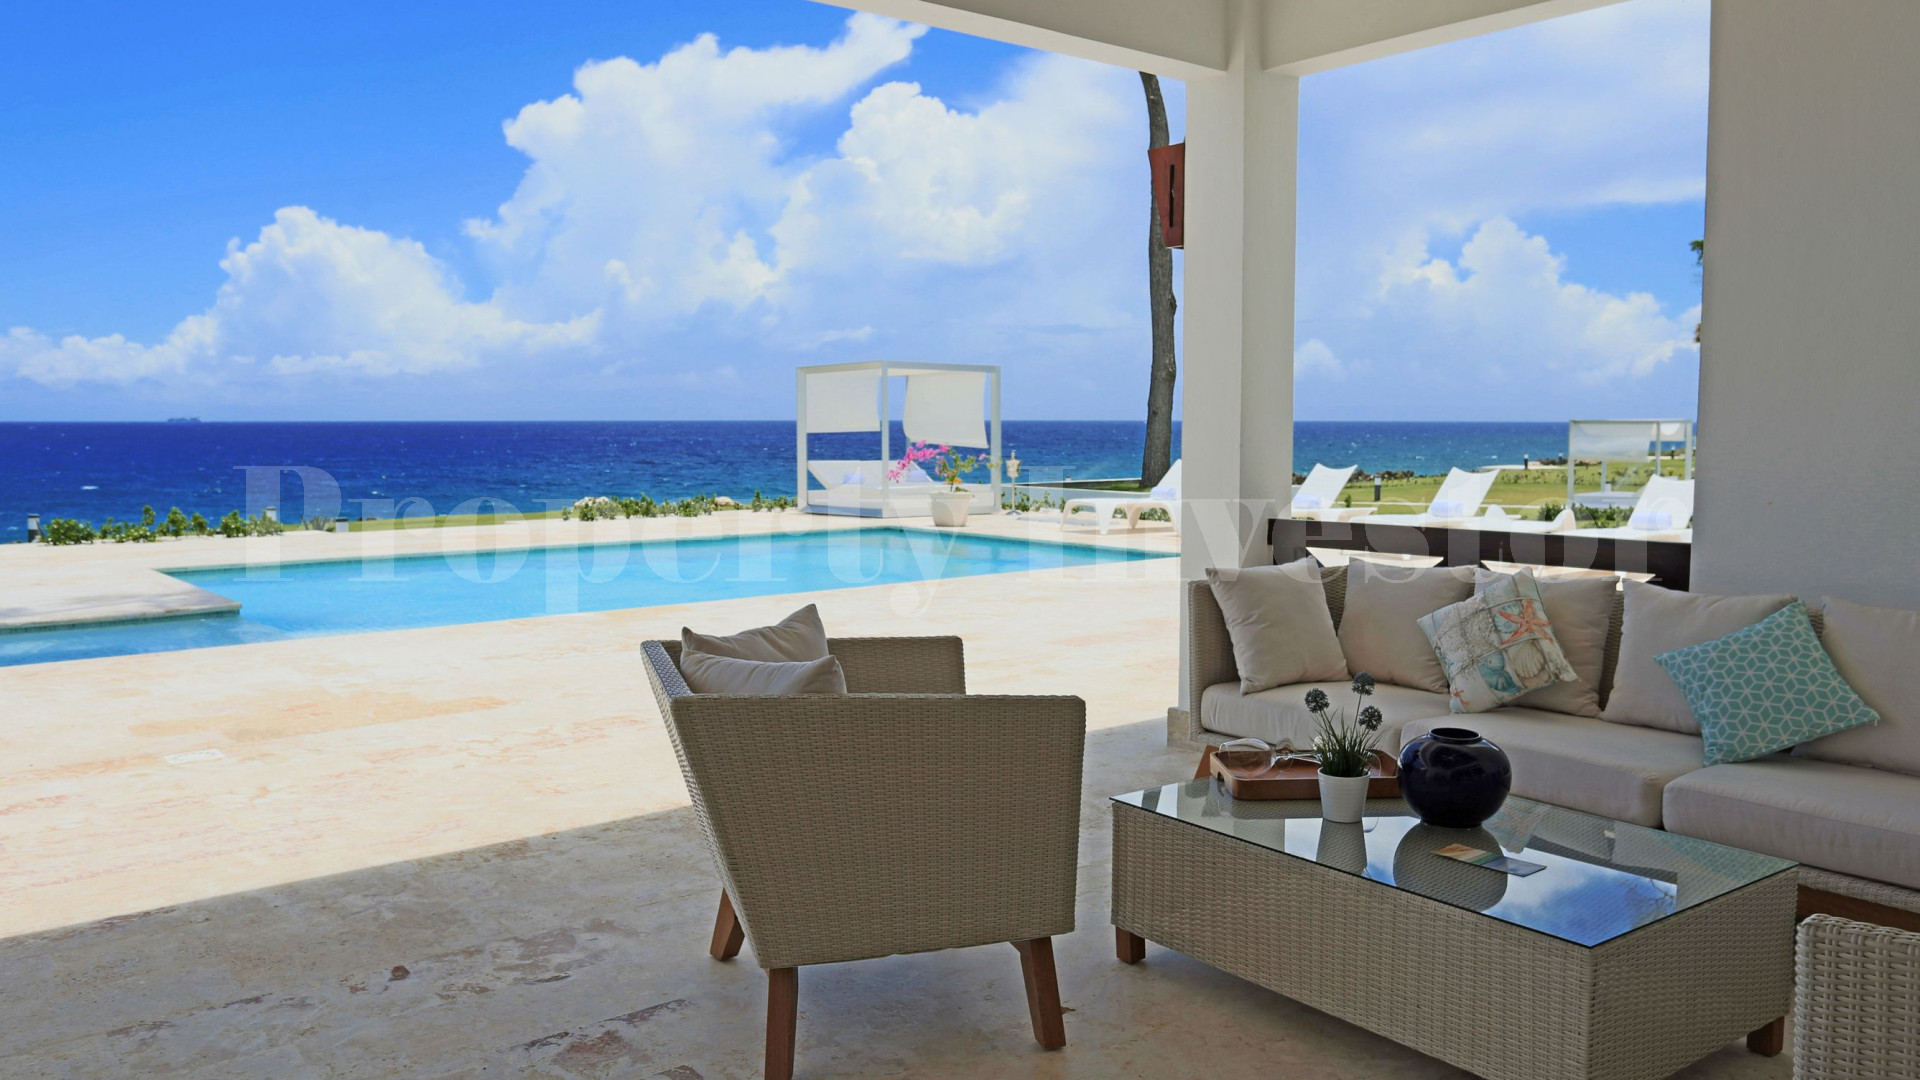 3 Bedroom Oceanfront Villa in the Dominican Republic with 30 Year Financing (Villa 2)